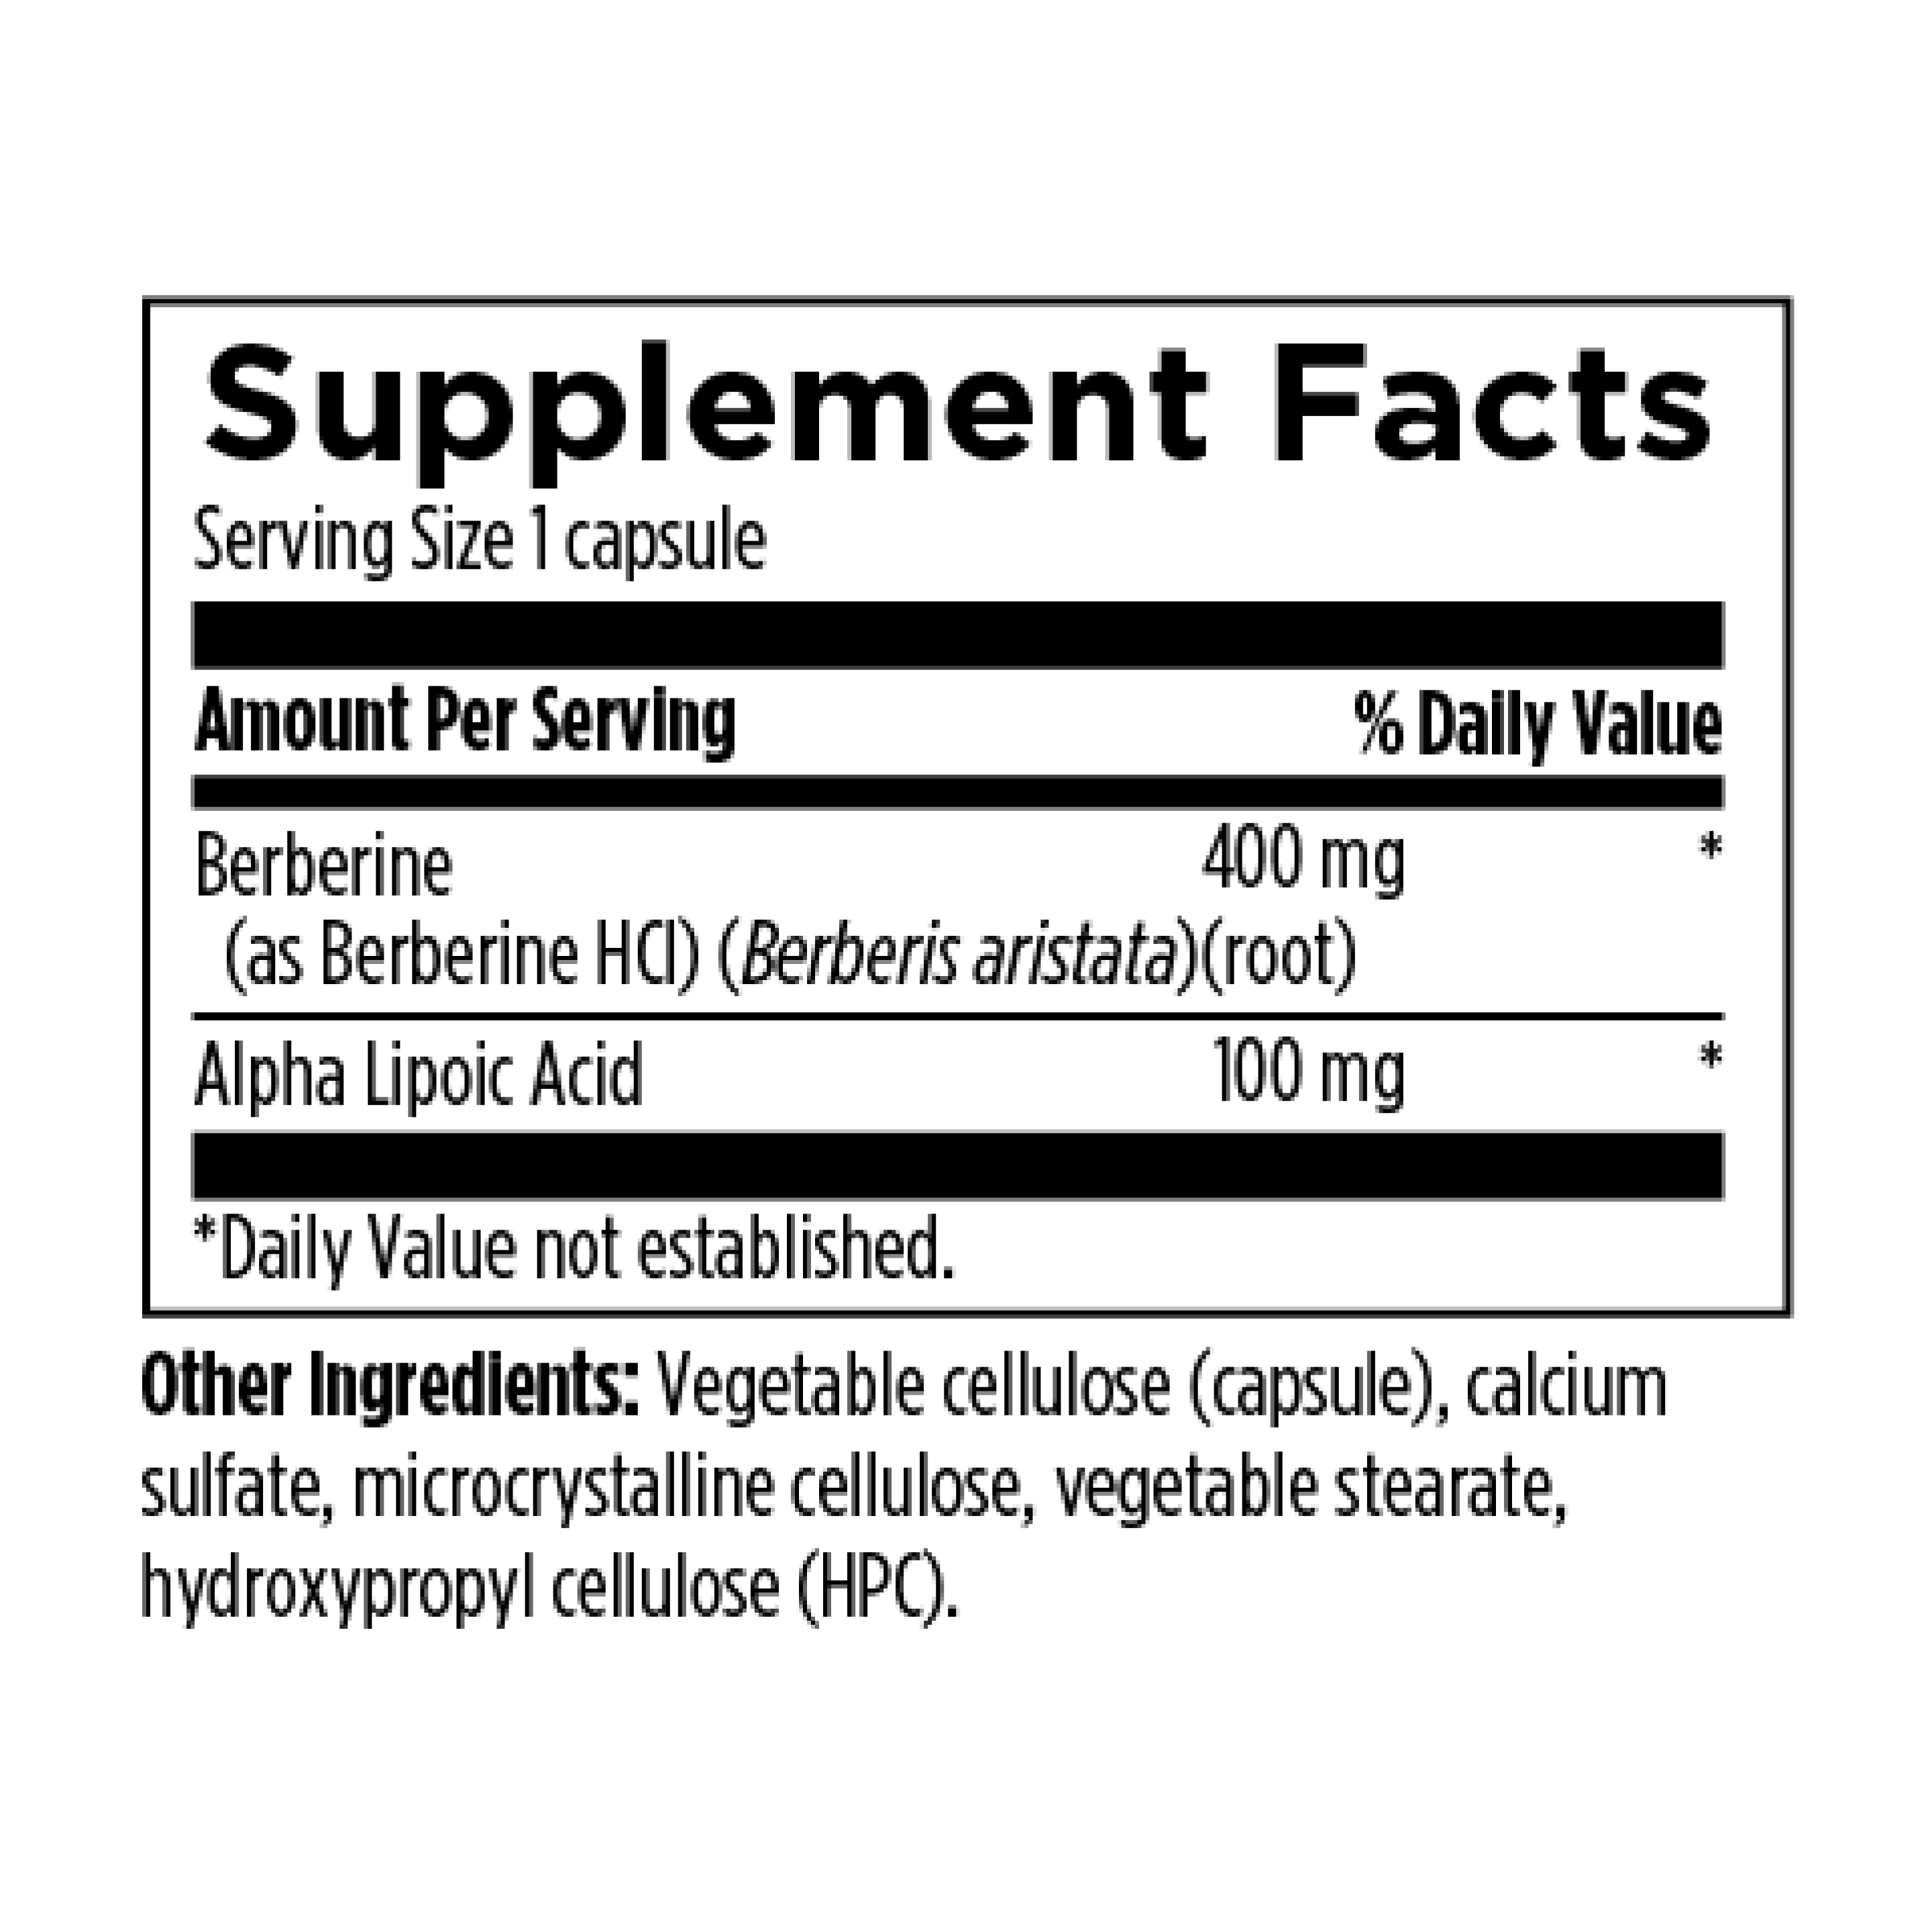 Berberine Synergy 400 mg + 100 mg ALA -NAFA-